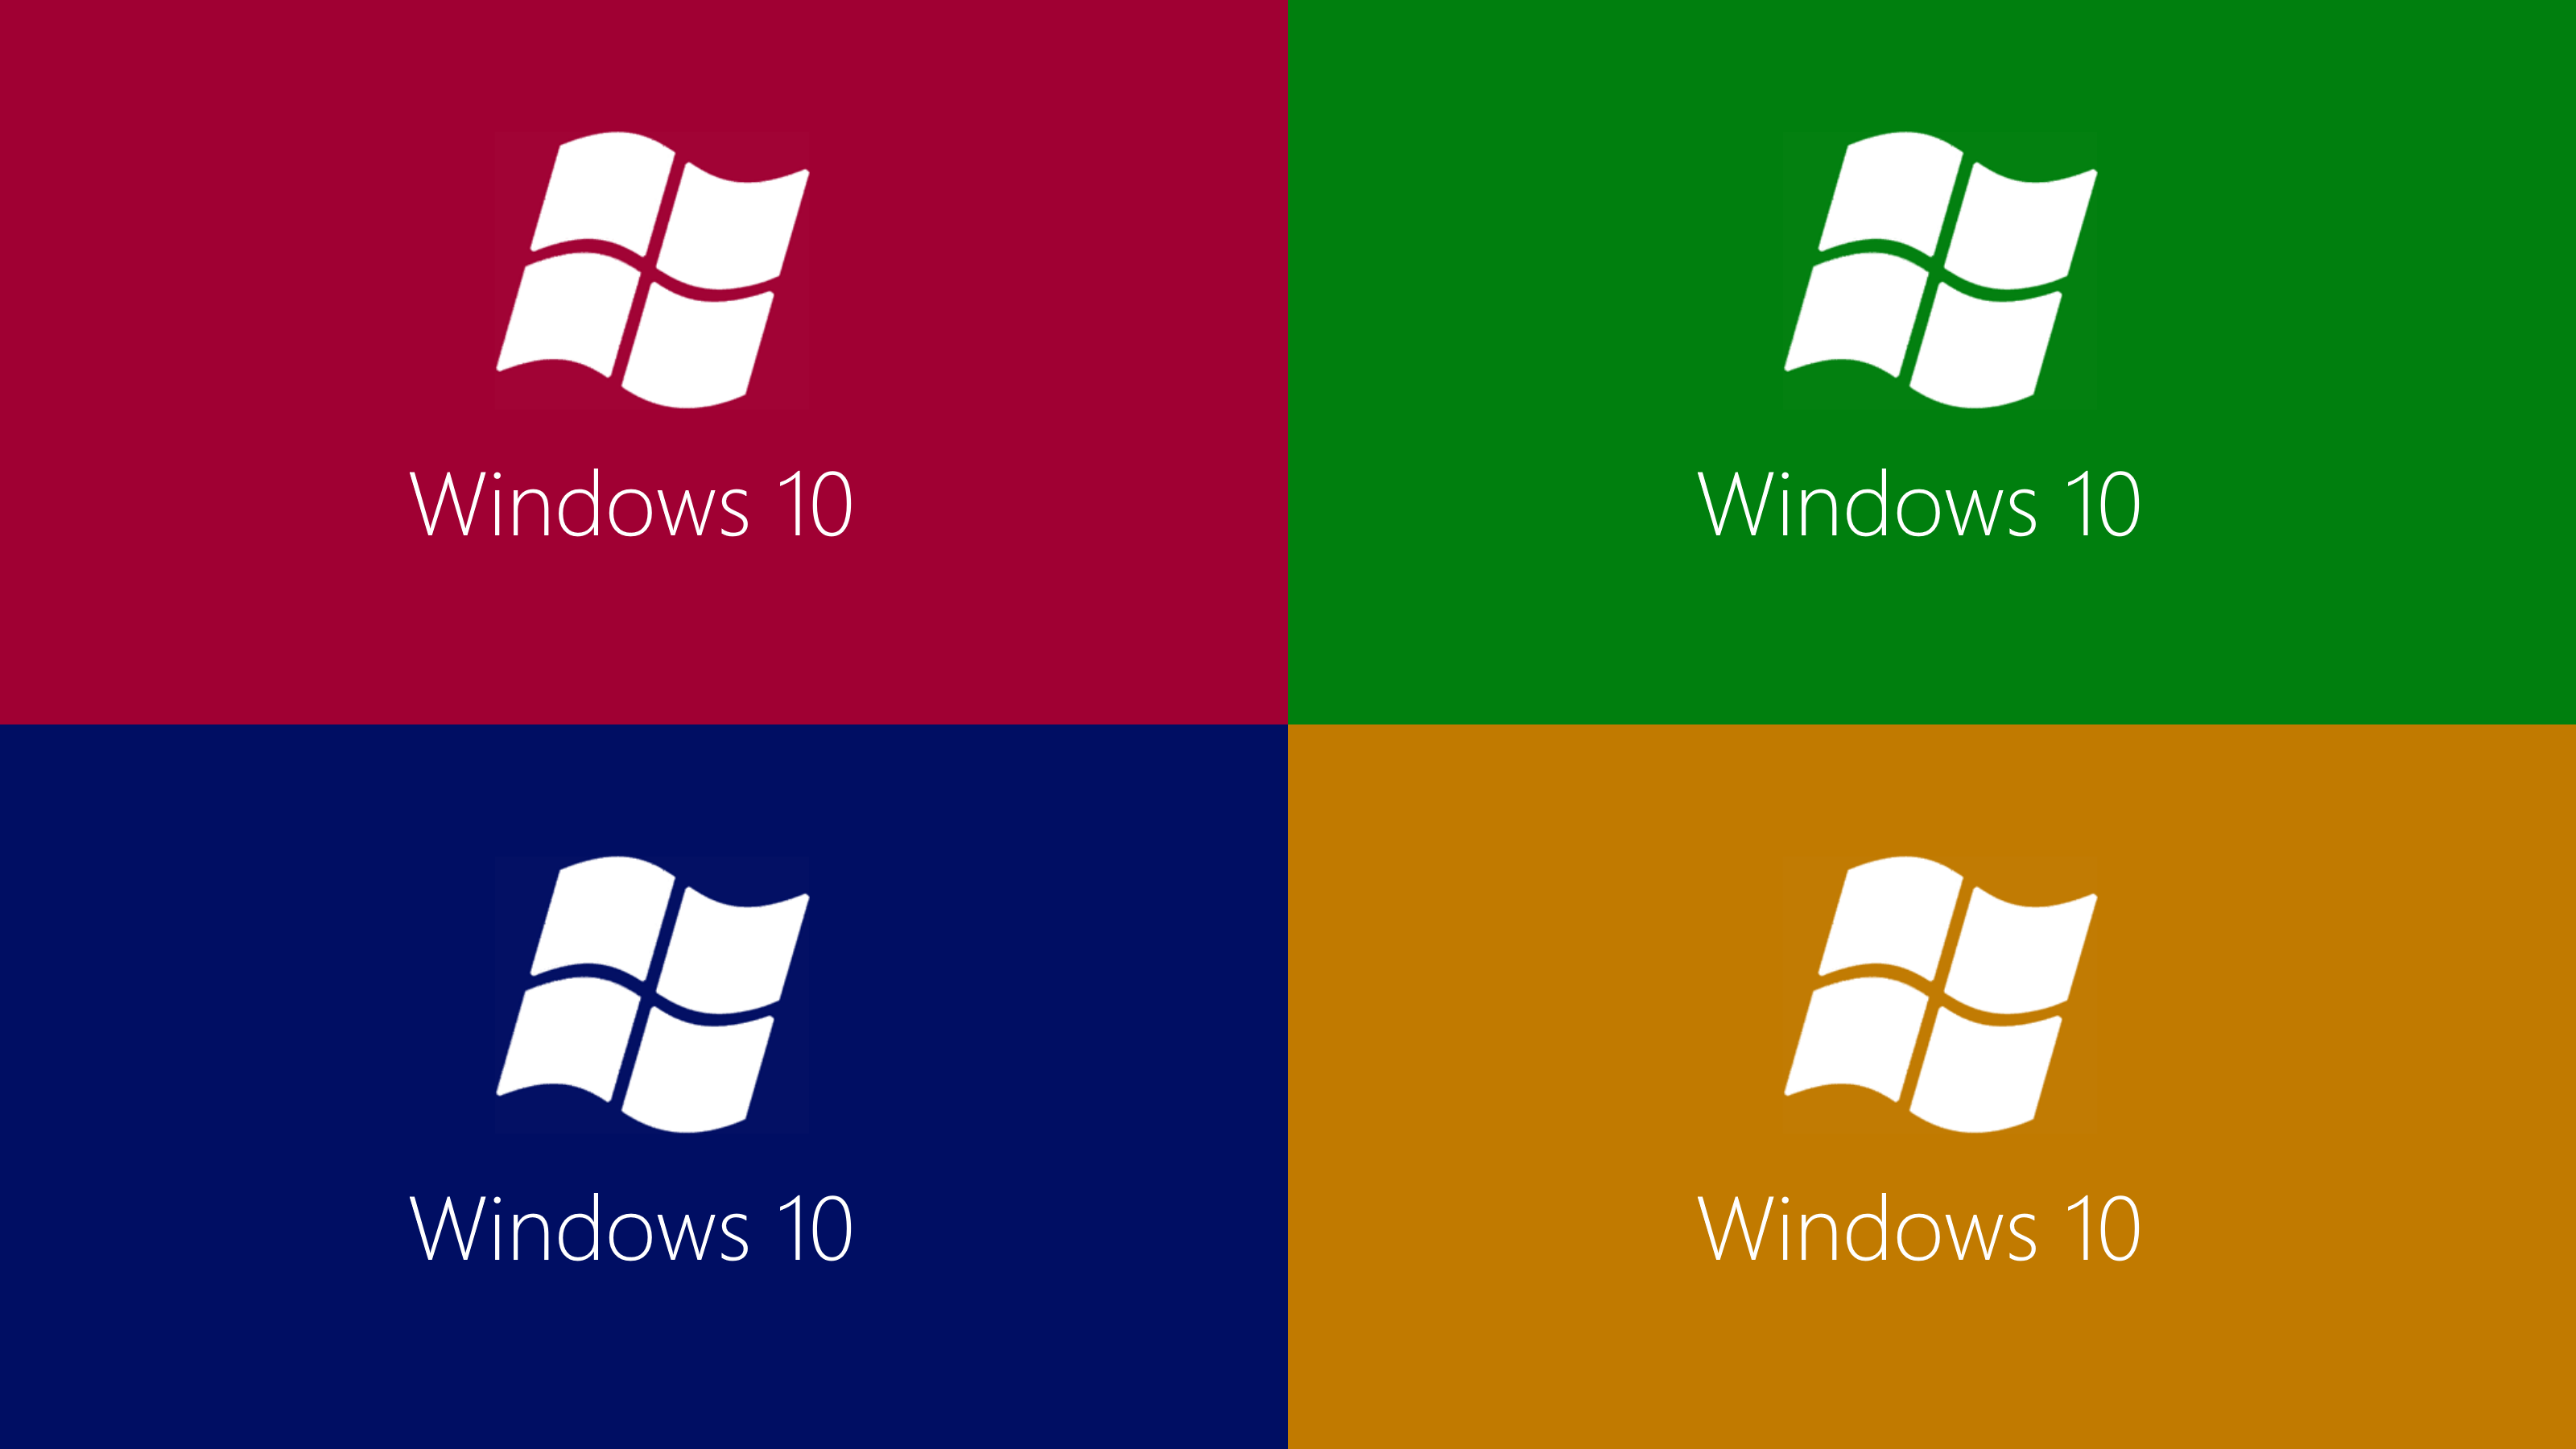 Windows 10 Old Colors Wallpapers by setapdede on DeviantArt